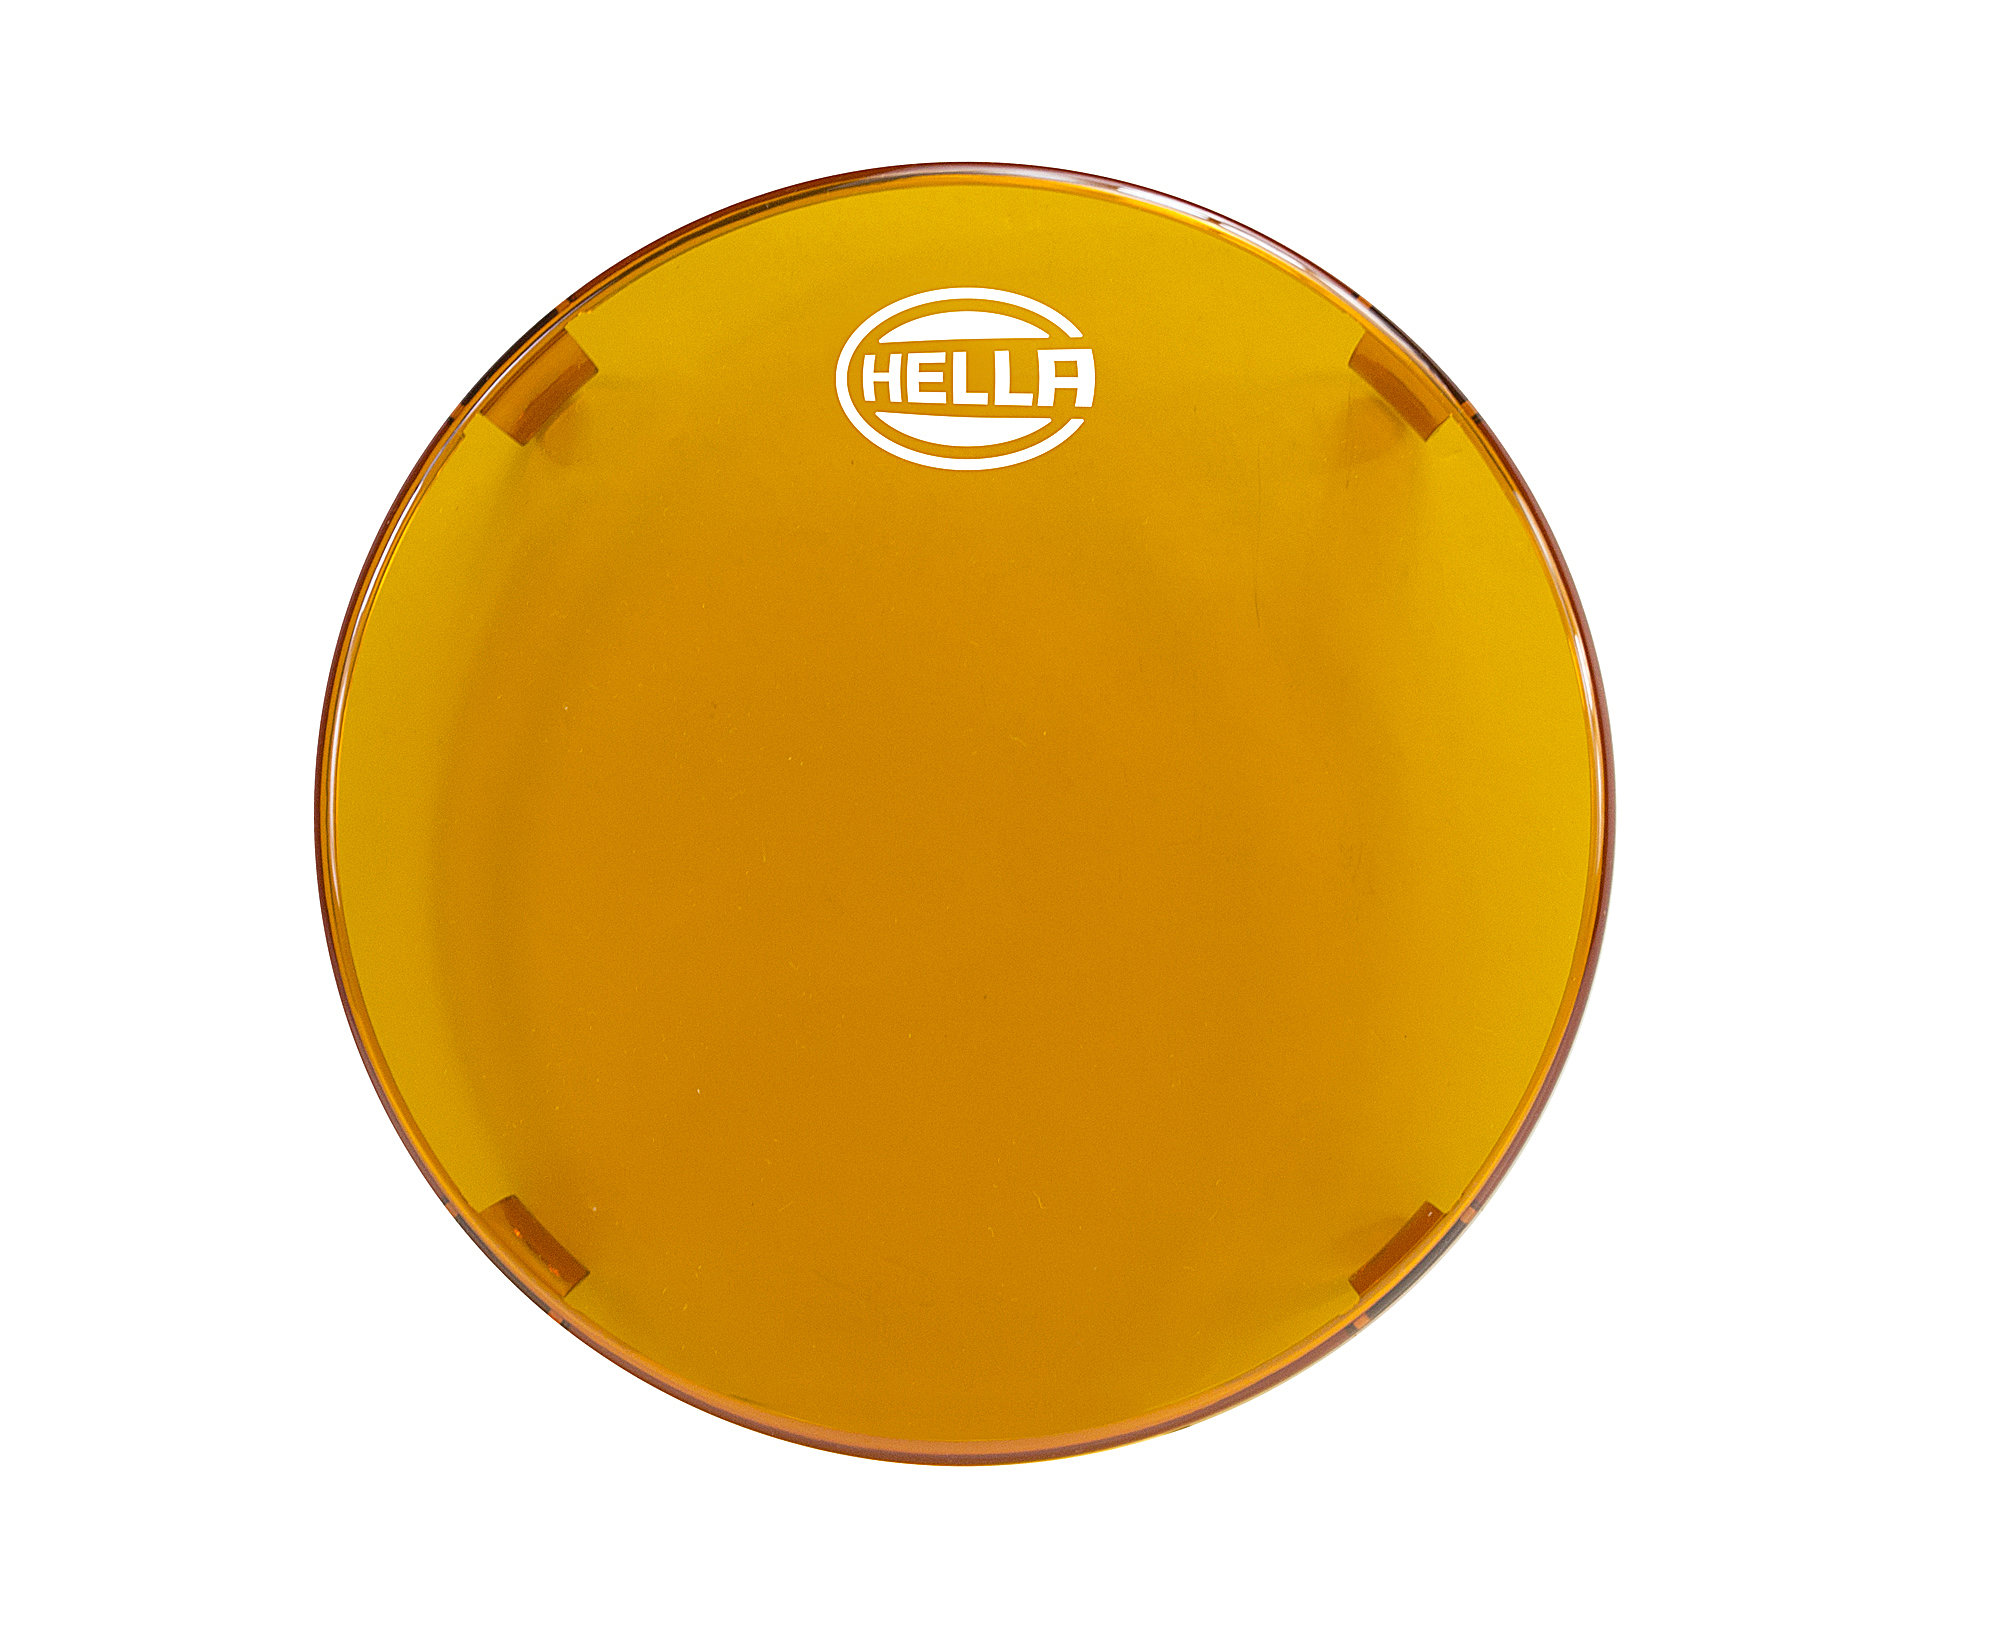 Hella 358116991 500 Series Amber Light Guard | Quadratec